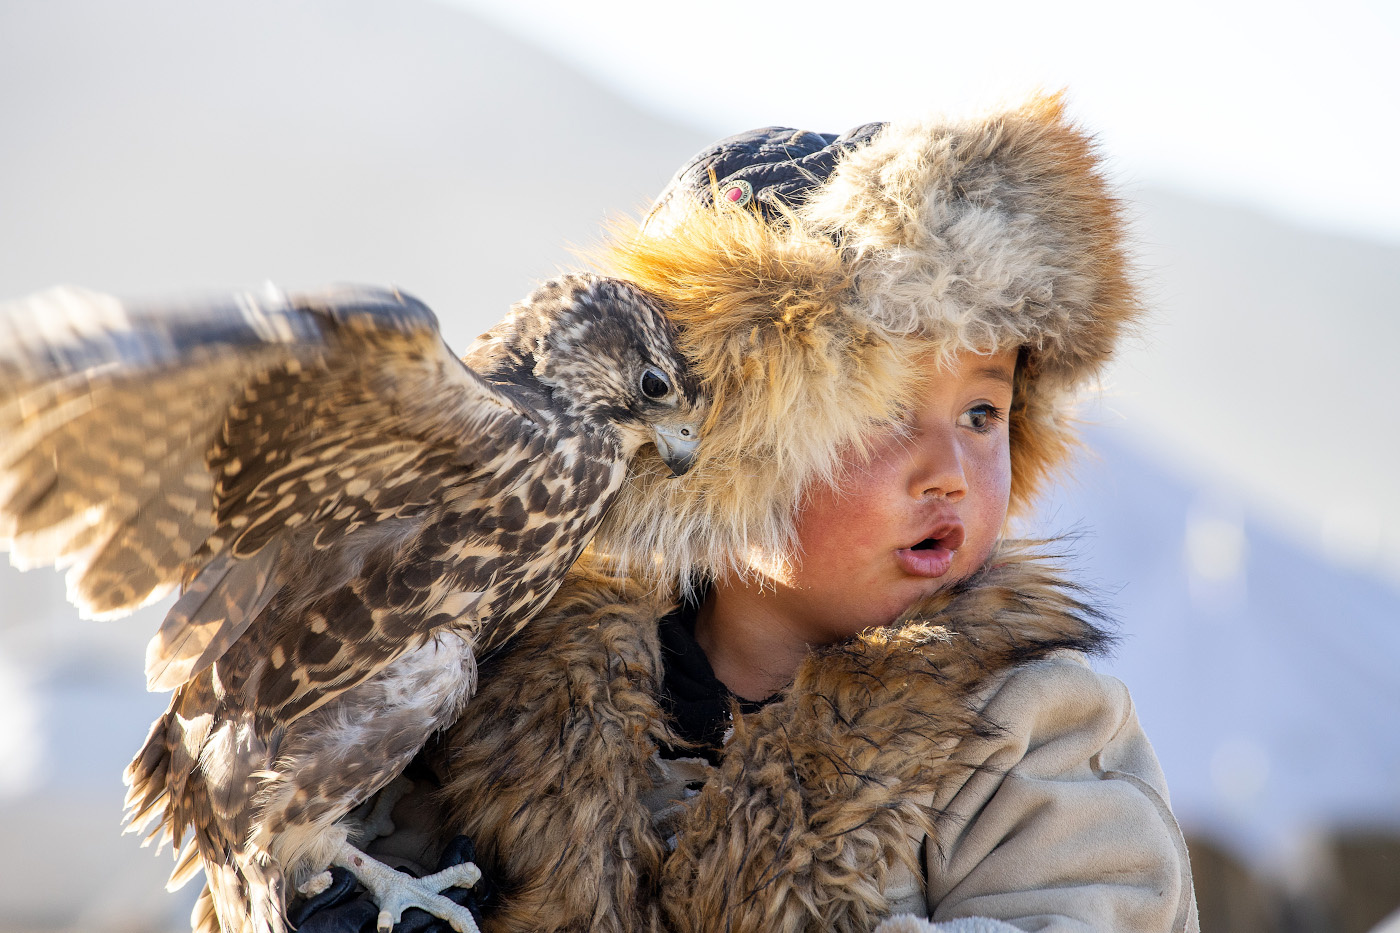 Юные охотники монголия беркутчи фестиваль охотник сокол беркут ребенок улгий mongolia ulgii olgii eagle child mongolian